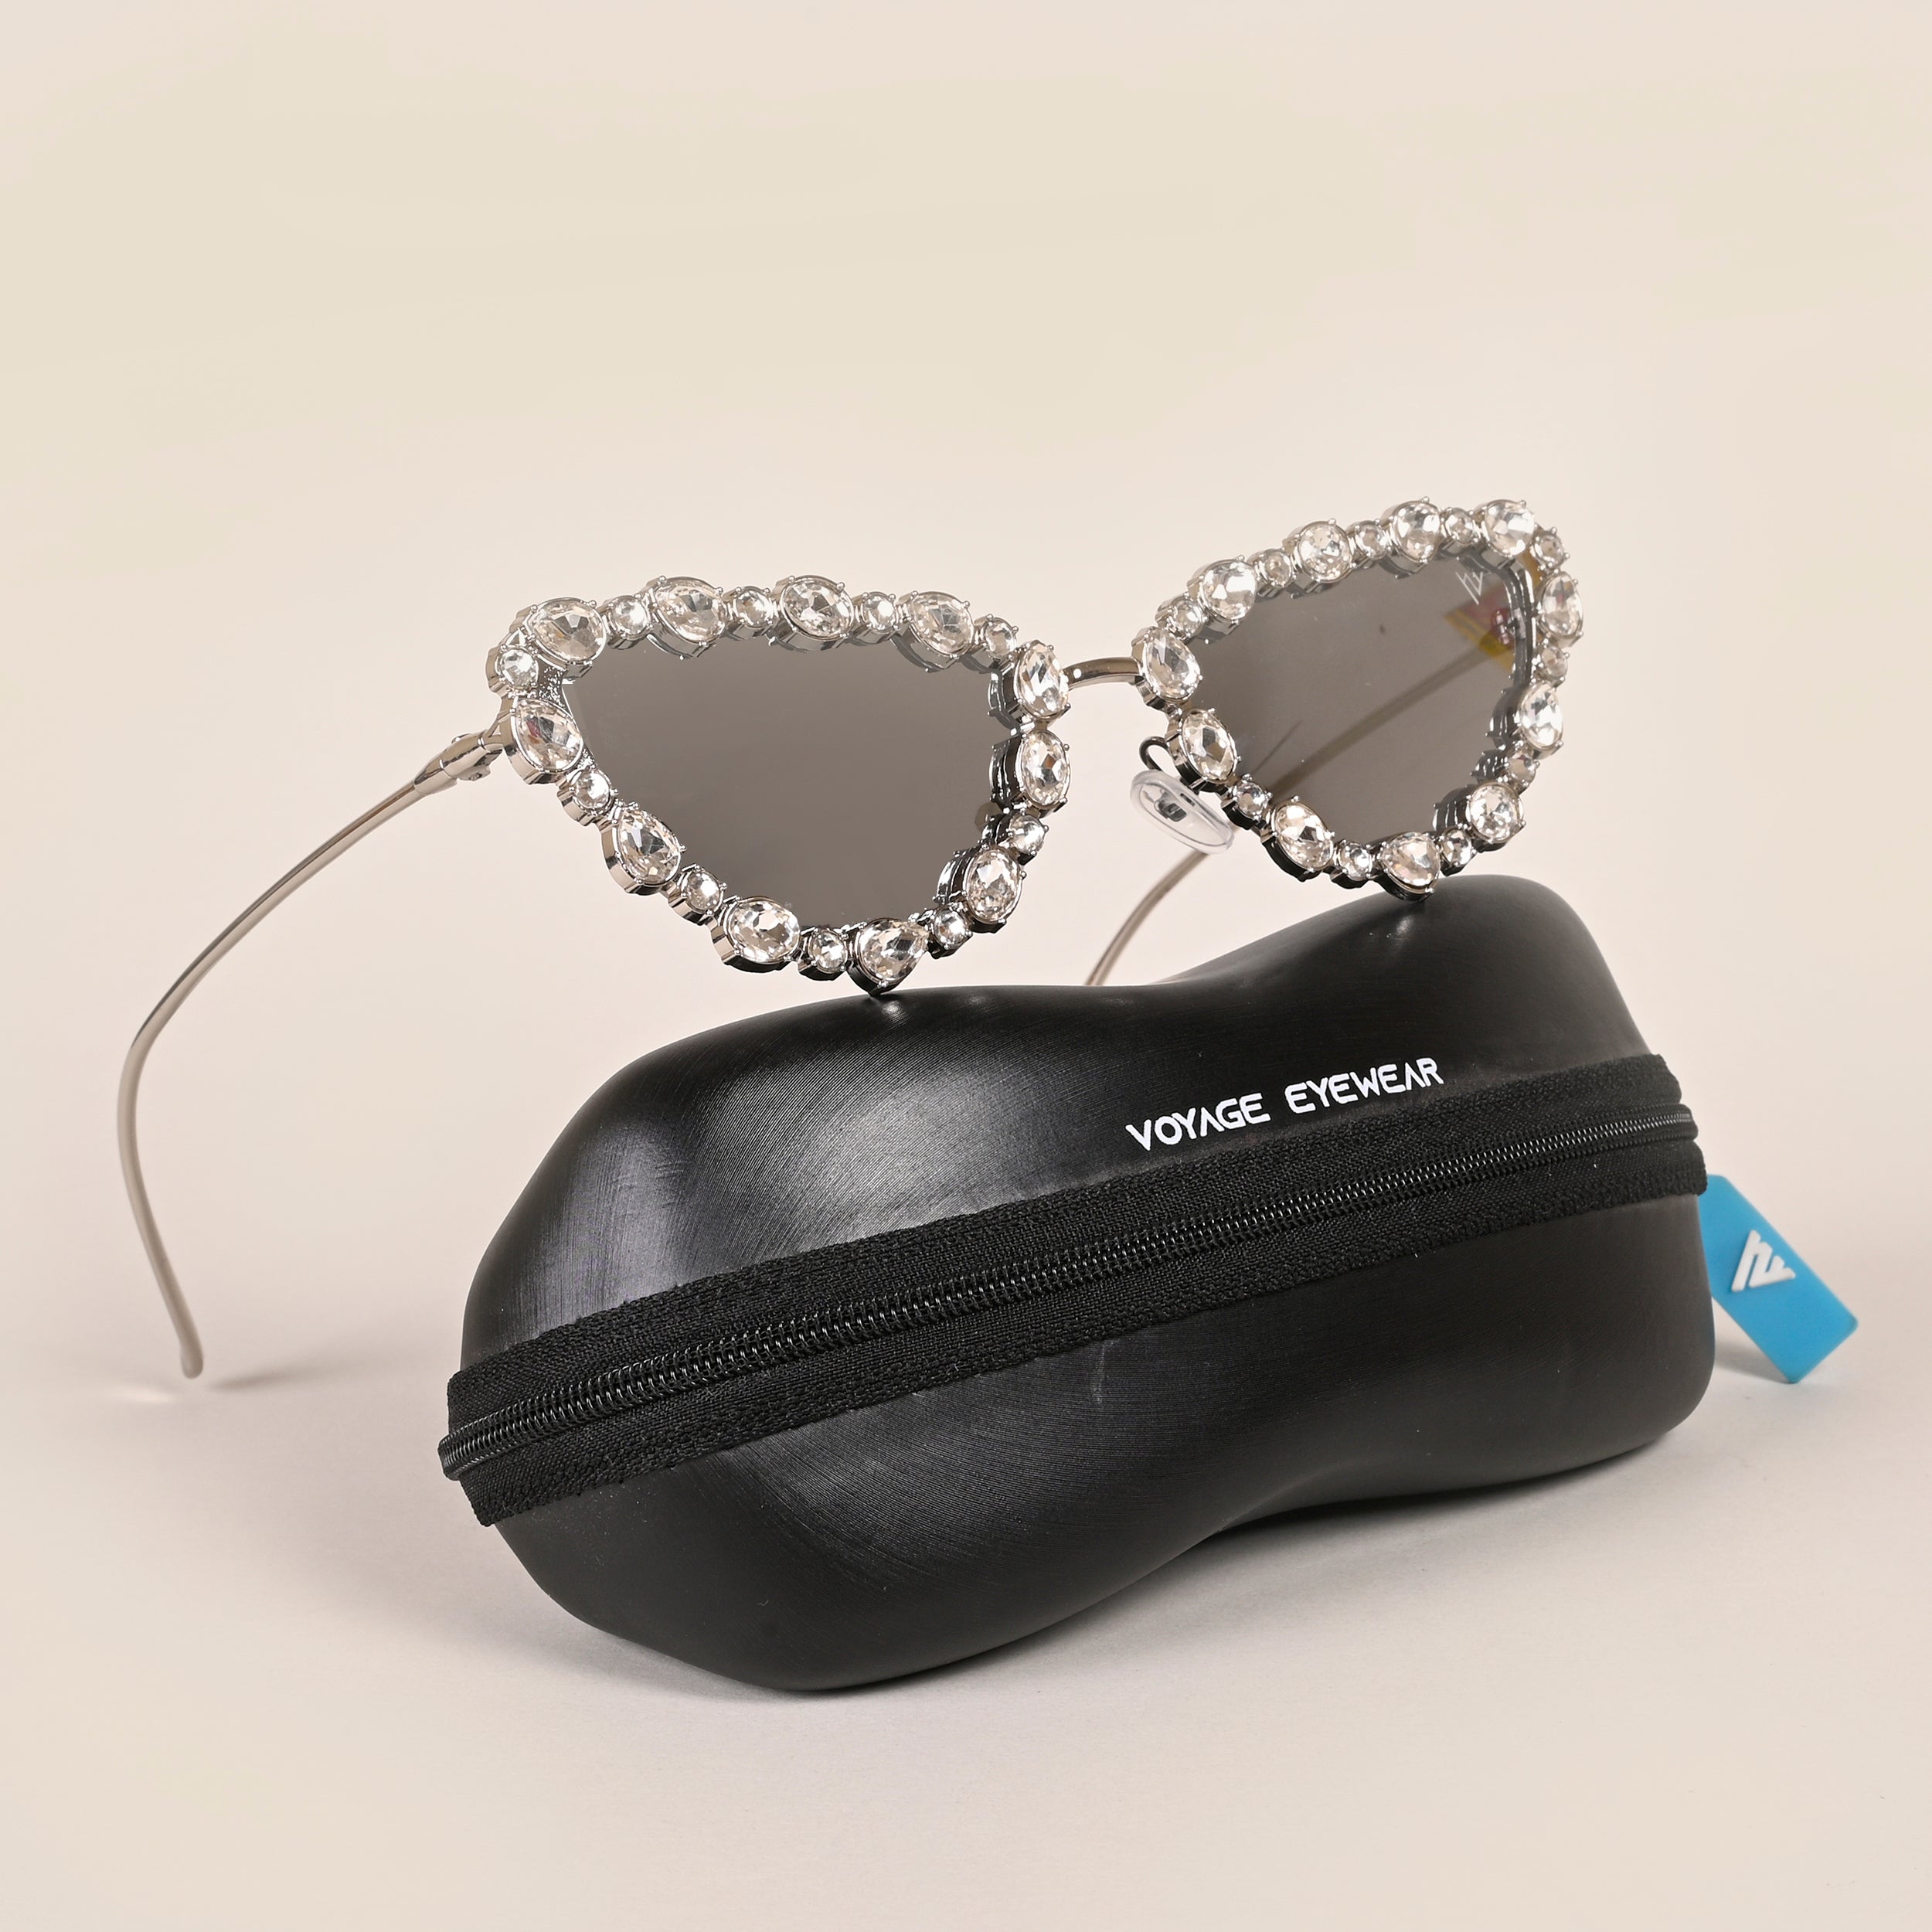 Voyage Grey Cateye Sunglasses for Women (3562MG4126)